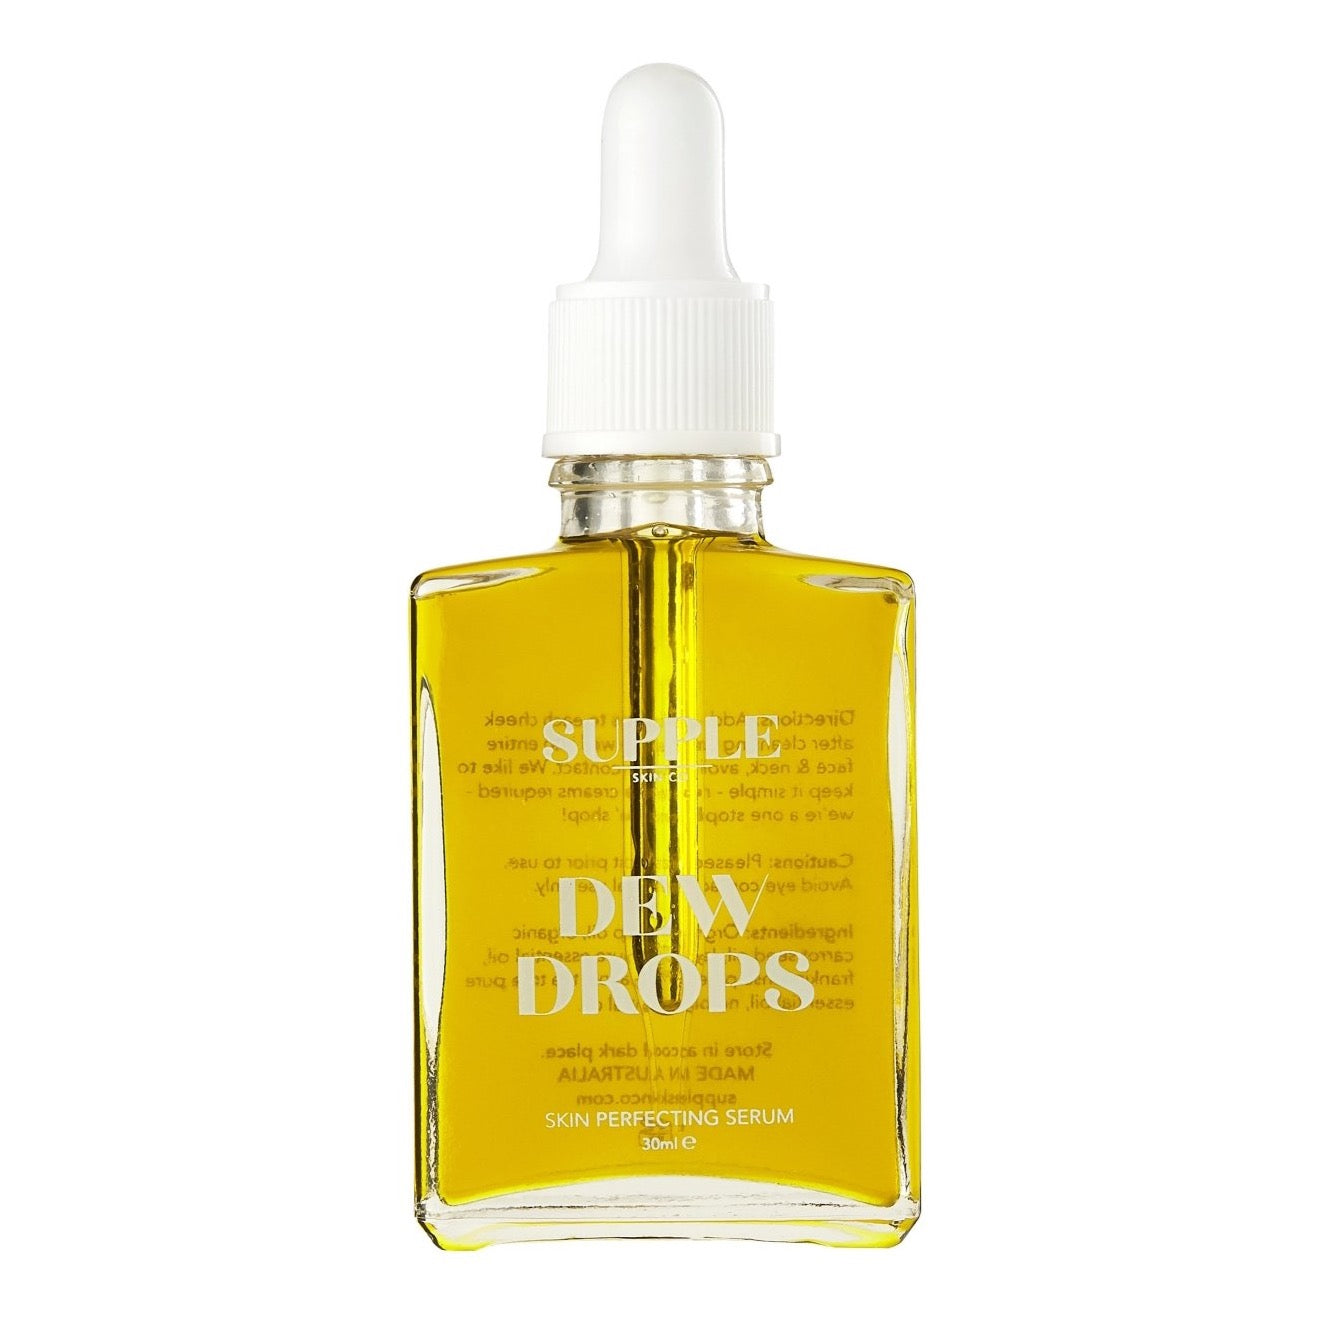 Dew Drops - Original - Supple Skin Co